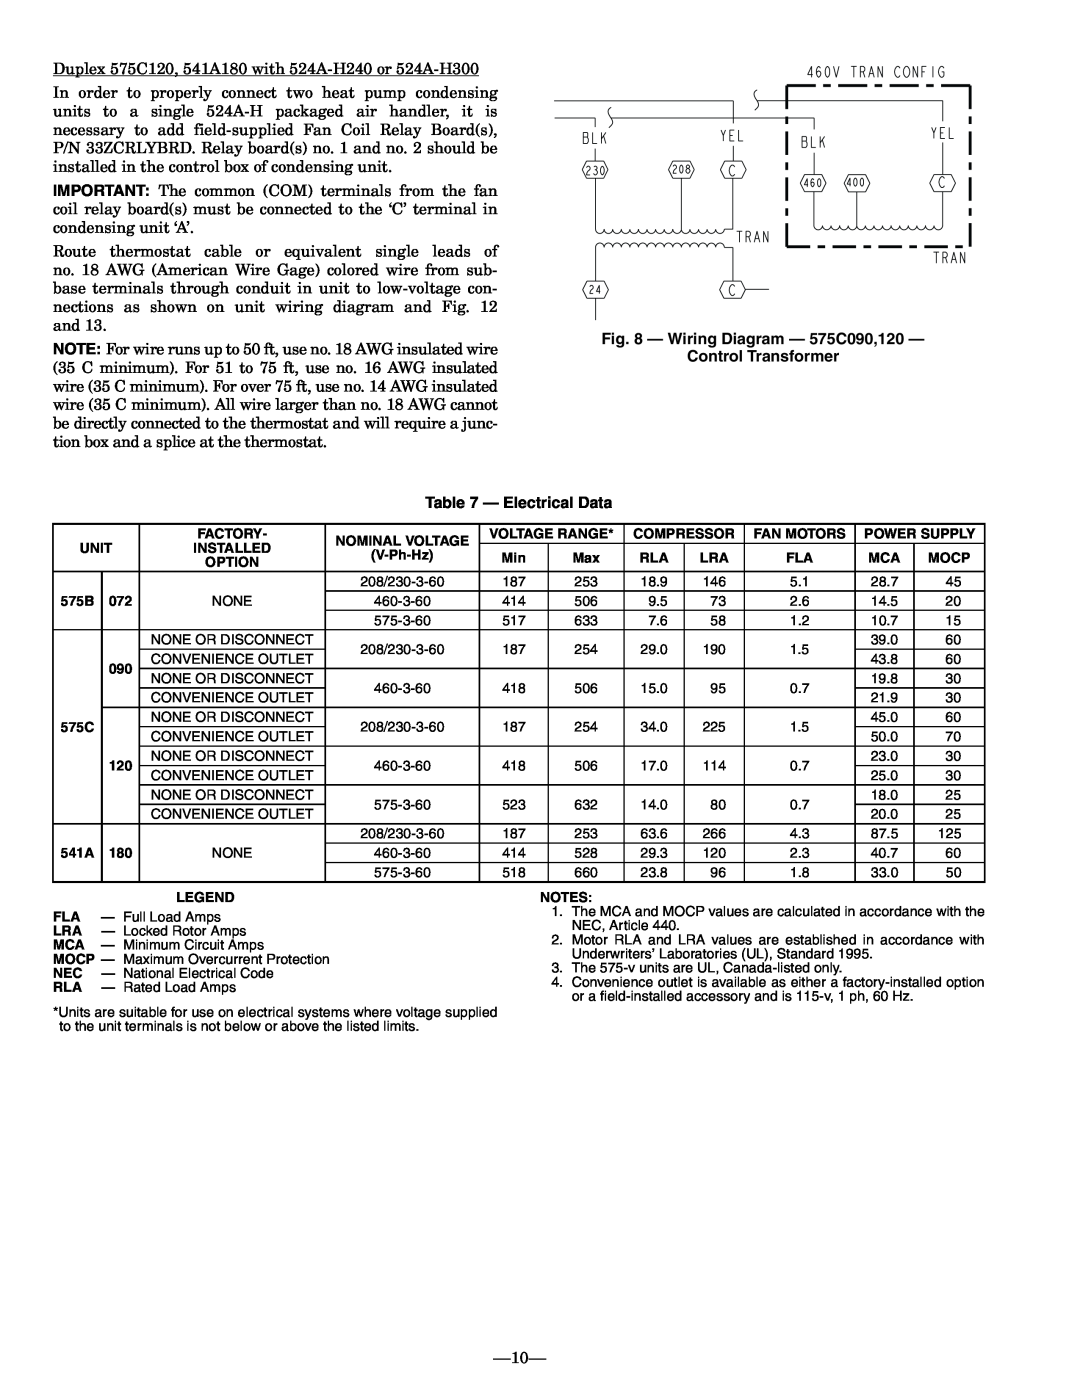 Bryant 575B, 541A dimensions Wiring Diagram - 575C090,120, Control Transformer, Electrical Data 